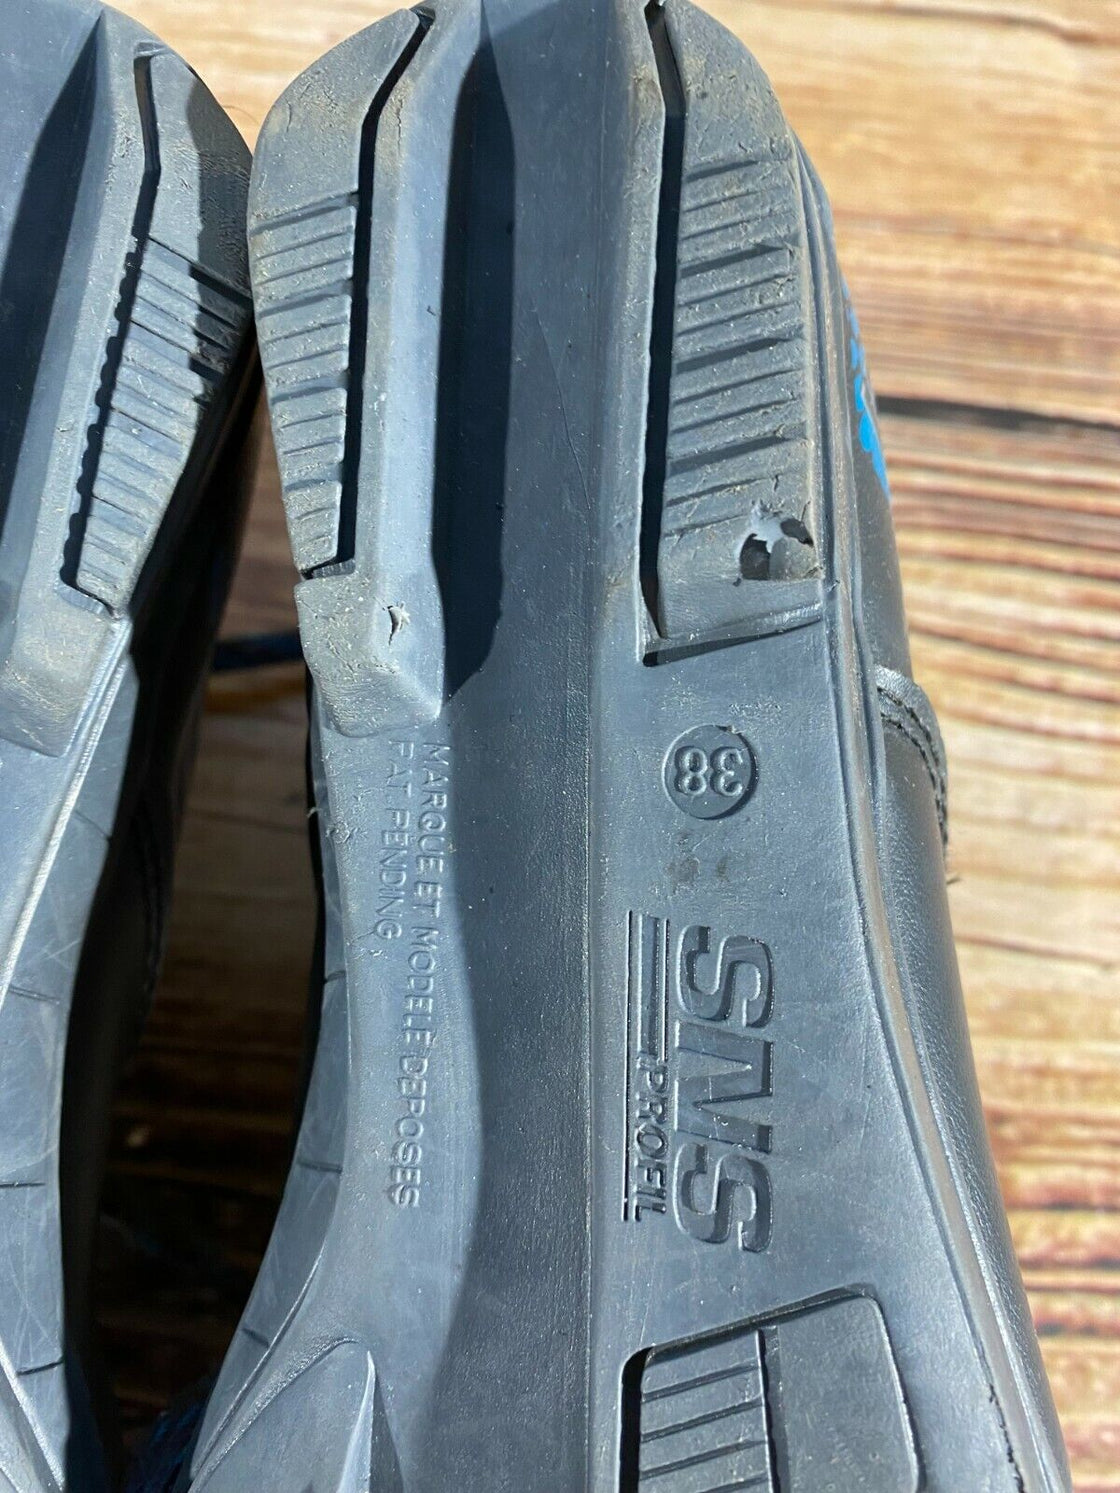 SALOMON 311 Nordic Cross Country Ski Boots Size EU38 US6 SNS Profil